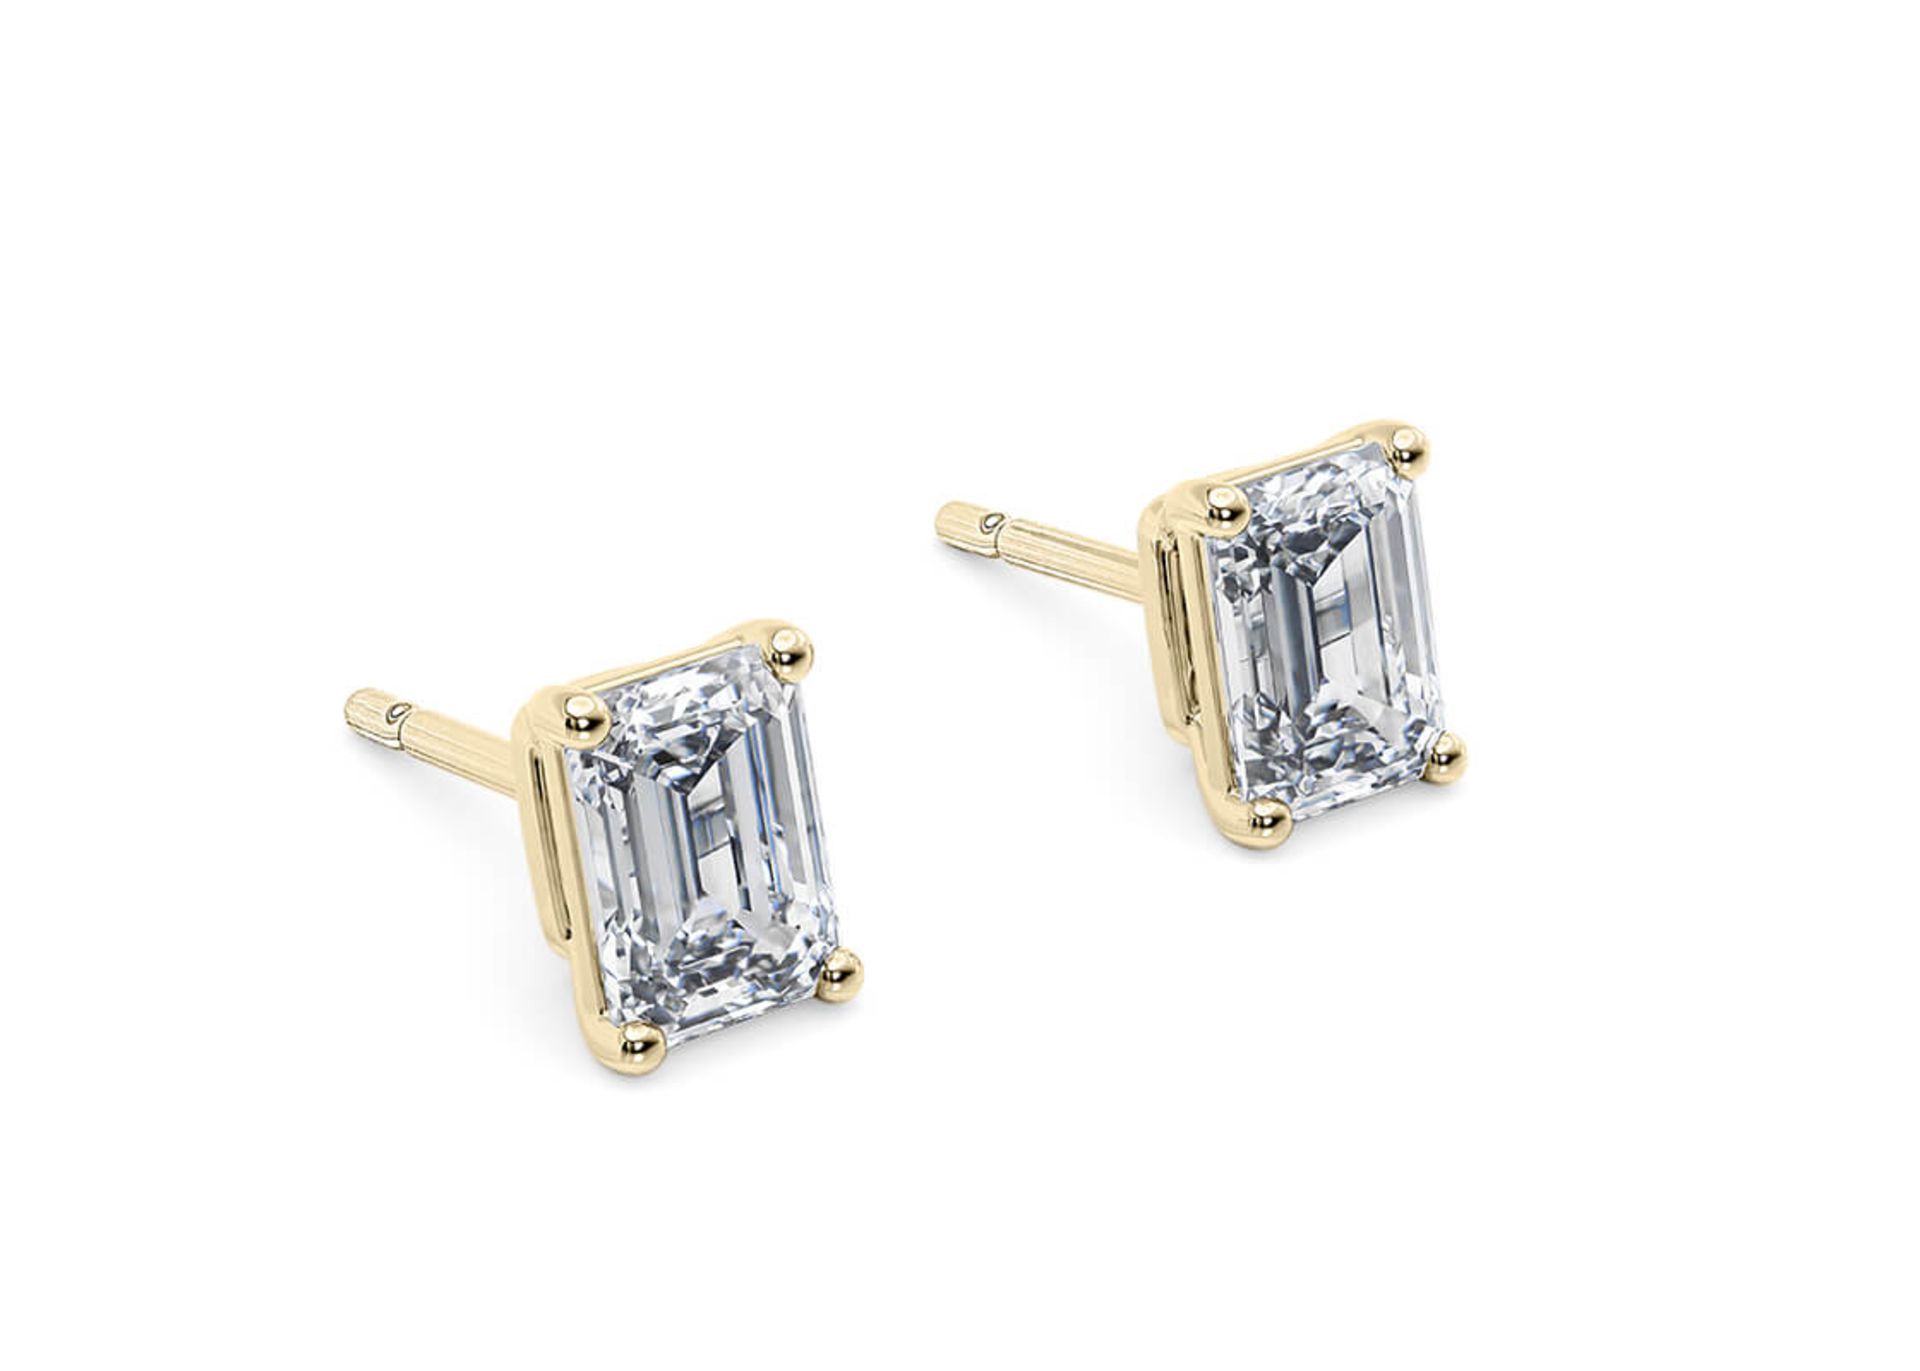 Emerald Cut 2.00 Carat Natural Diamond Earrings 18kt Yellow Gold - Colour E - VS Clarity- GIA - Image 2 of 3